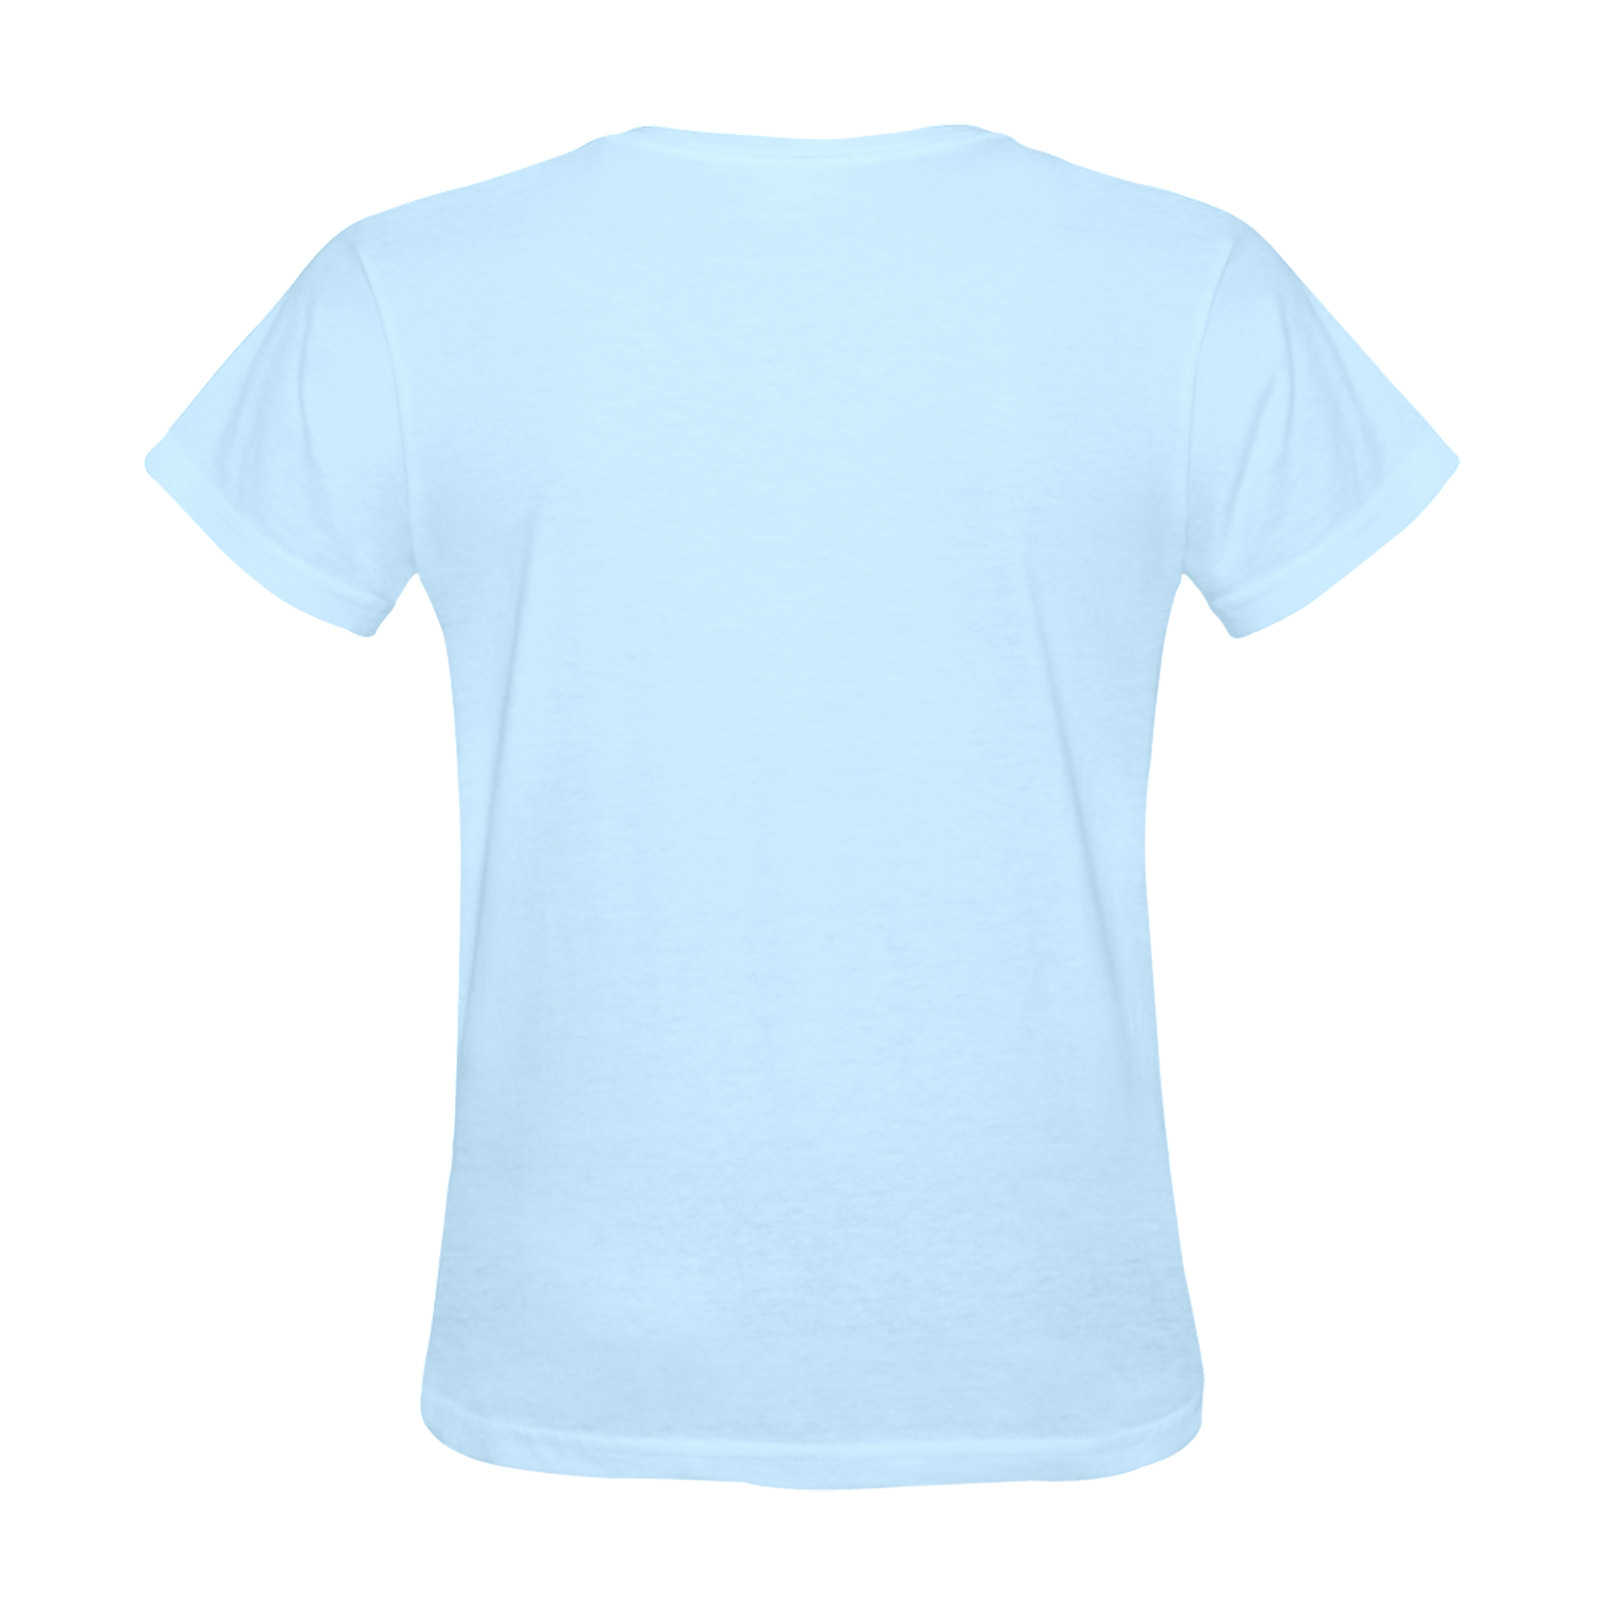 EMMANUEL DON'T DO IT! SUNNY WOMEN'S T-SHIRT LIGHT BLUE Sunny Women's T-shirt (Model T05)